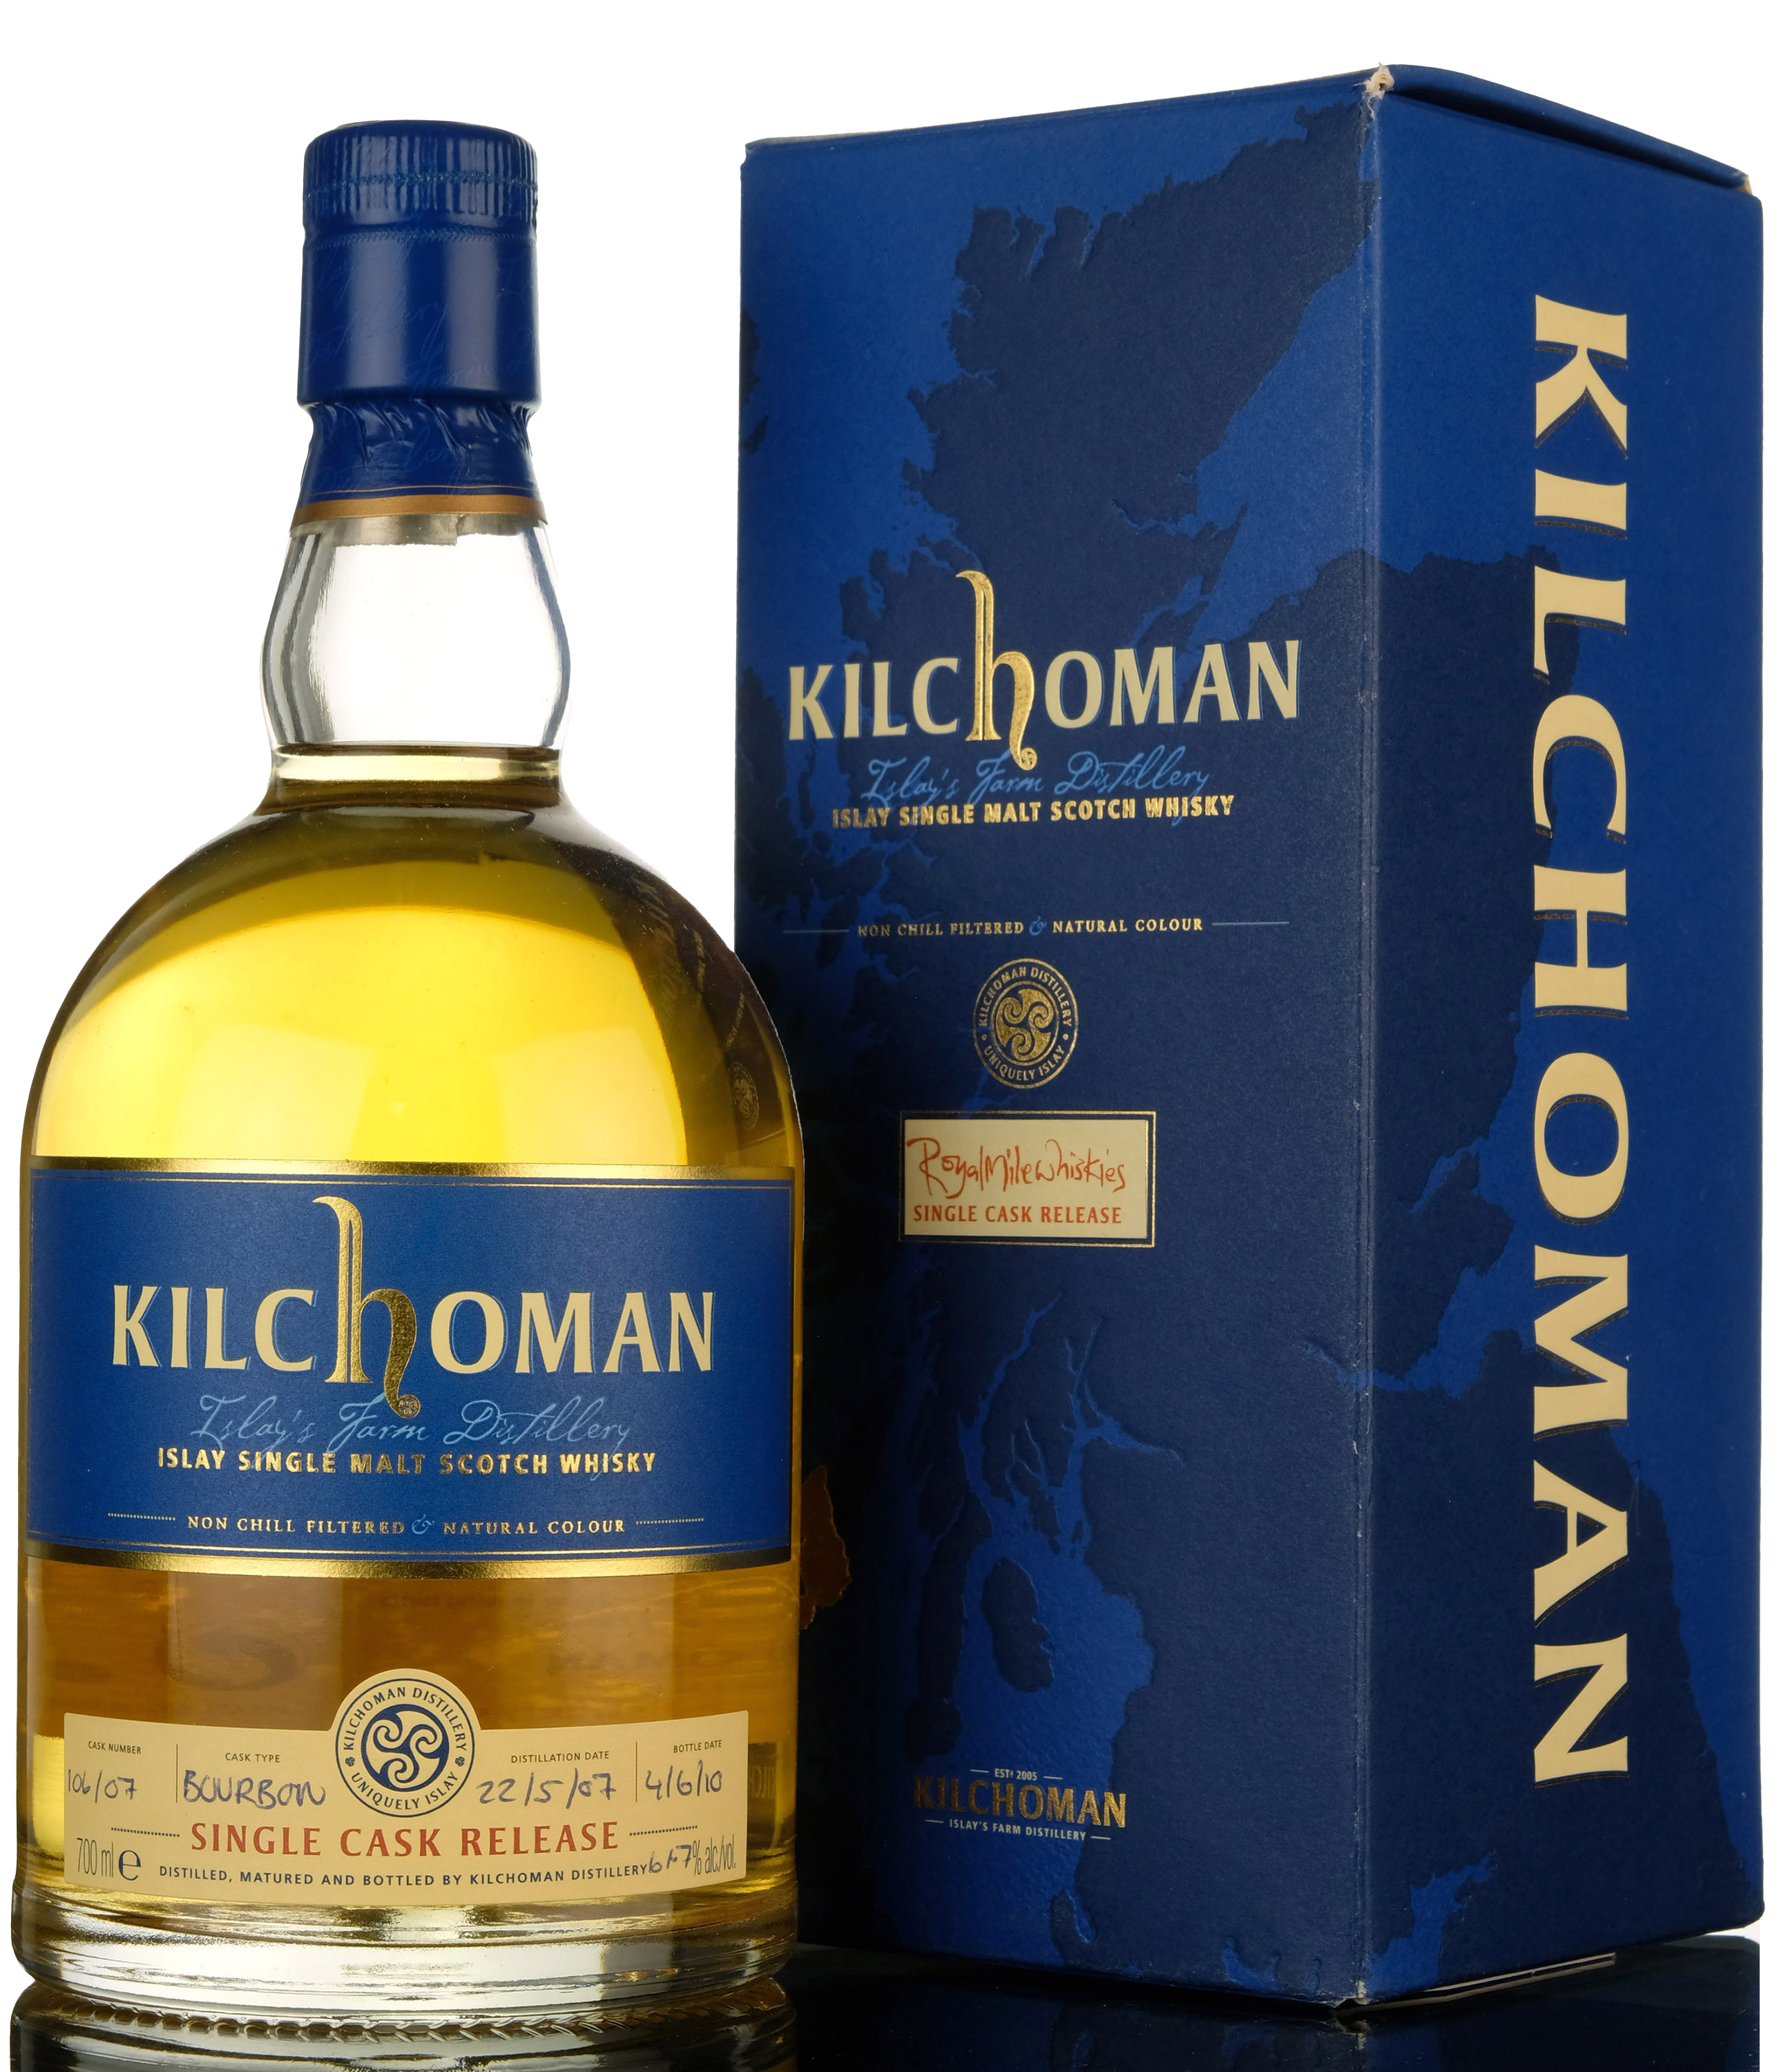 Kilchoman 2007-2010 - 3 Year Old - Single Cask 106 - Royal Mile Whiskies Exclusive